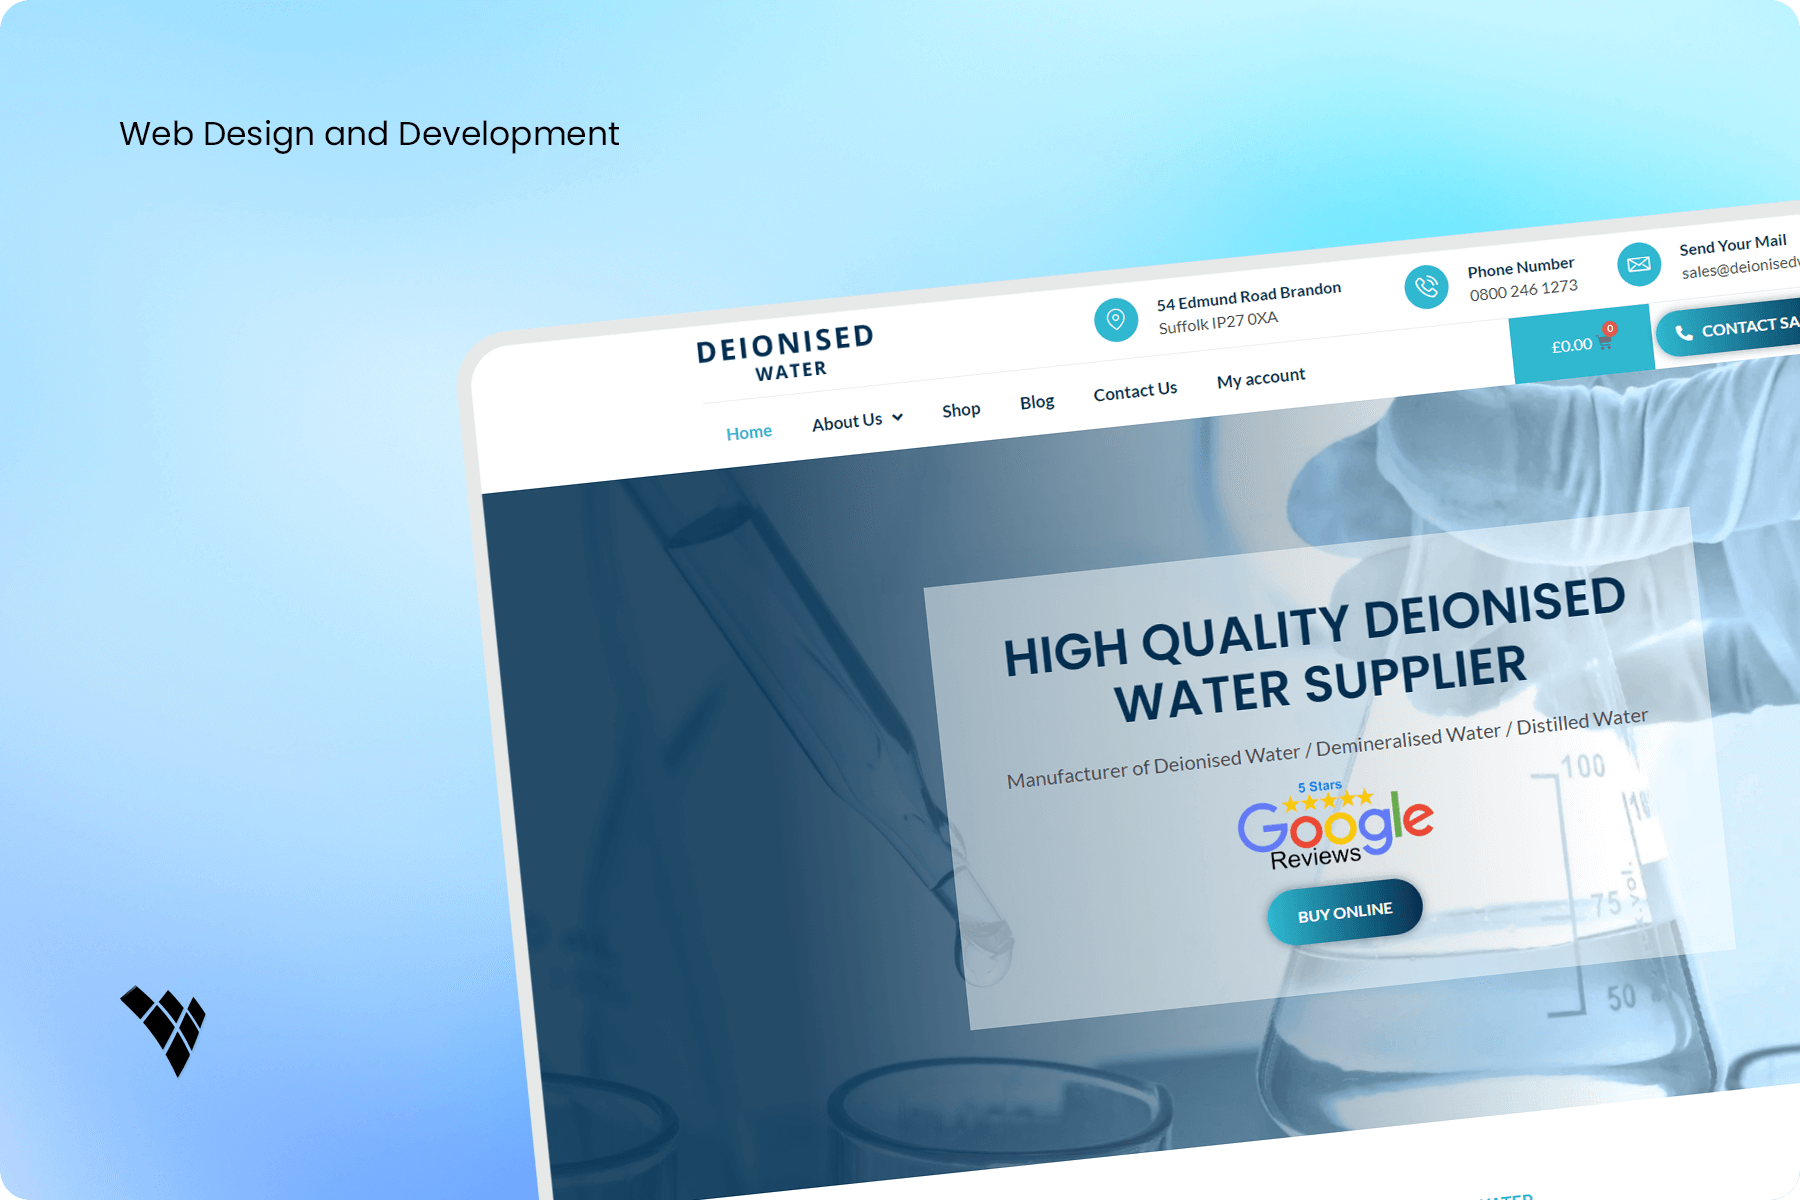 web design and development - deionised water